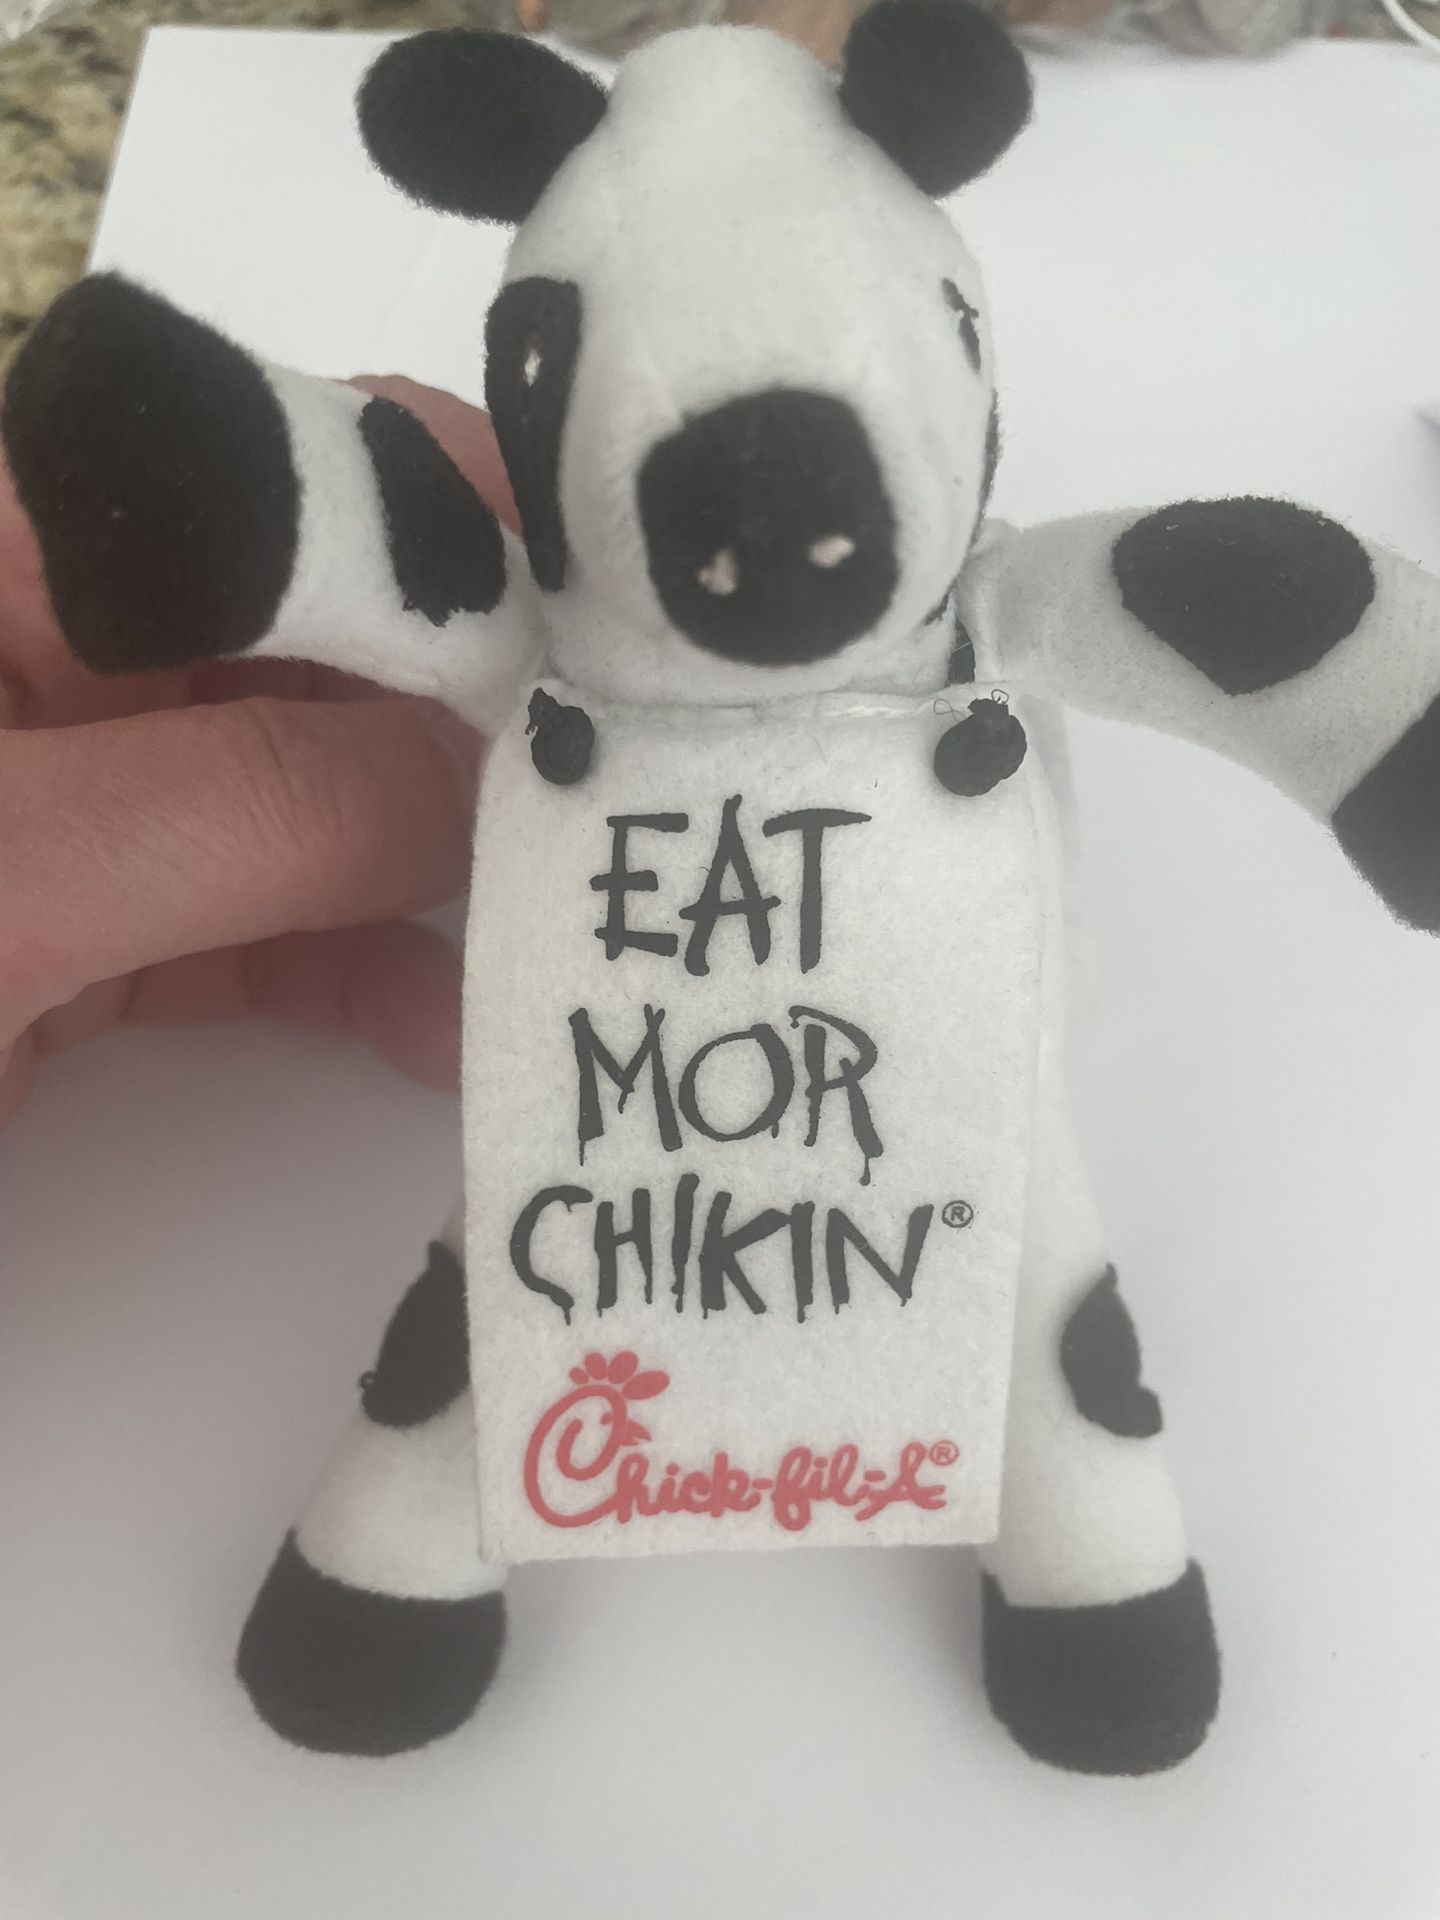 Chick-fil-a Stuffed Cow